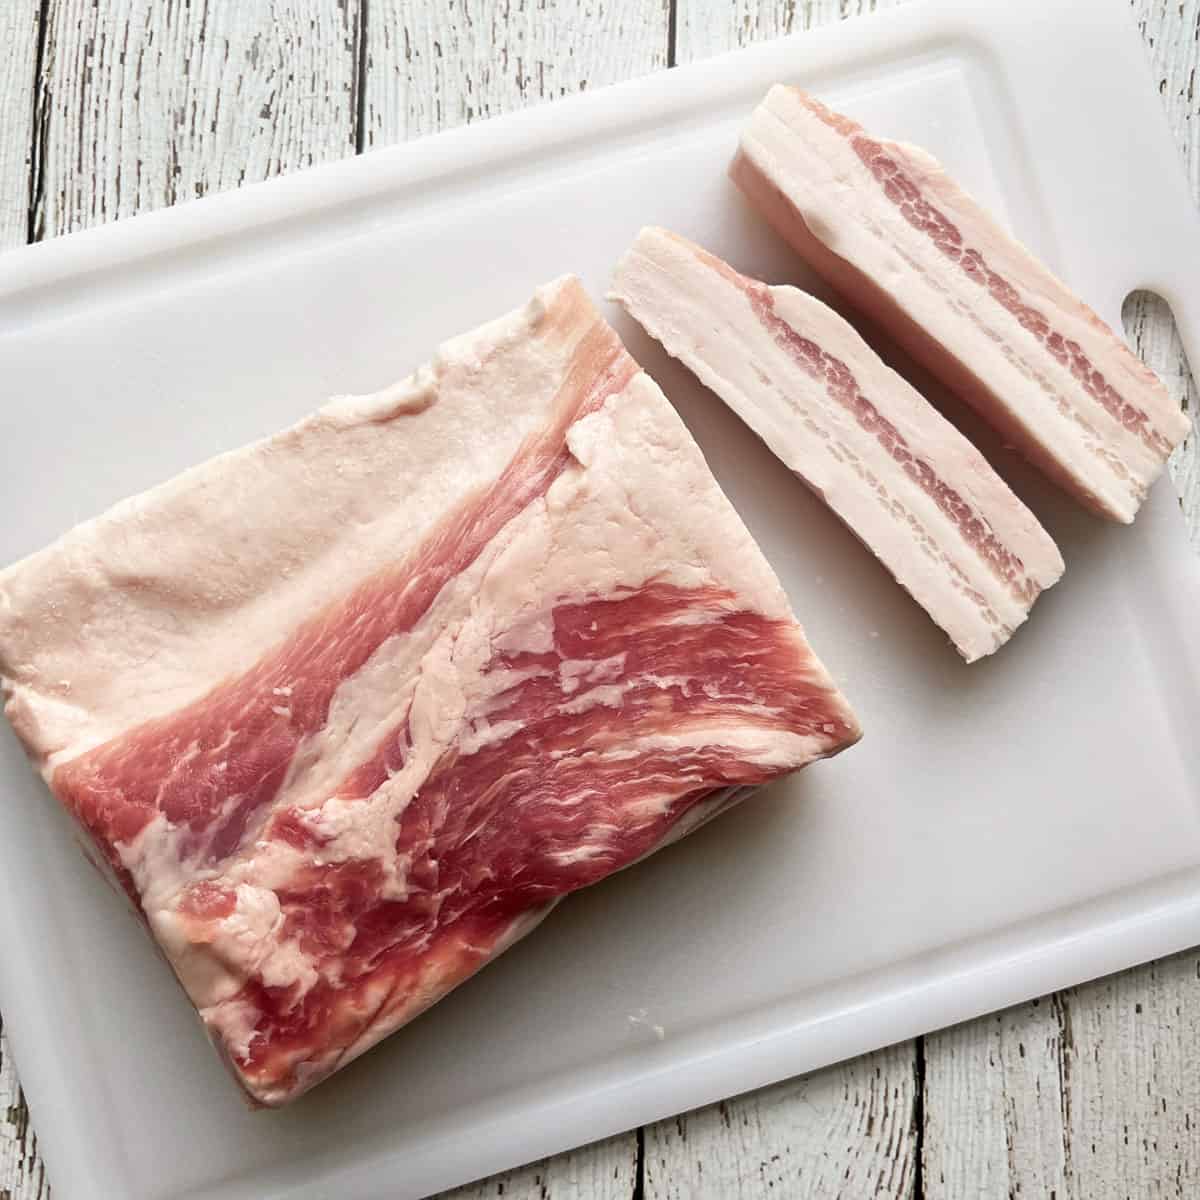 A whole pork belly sliced into strips.